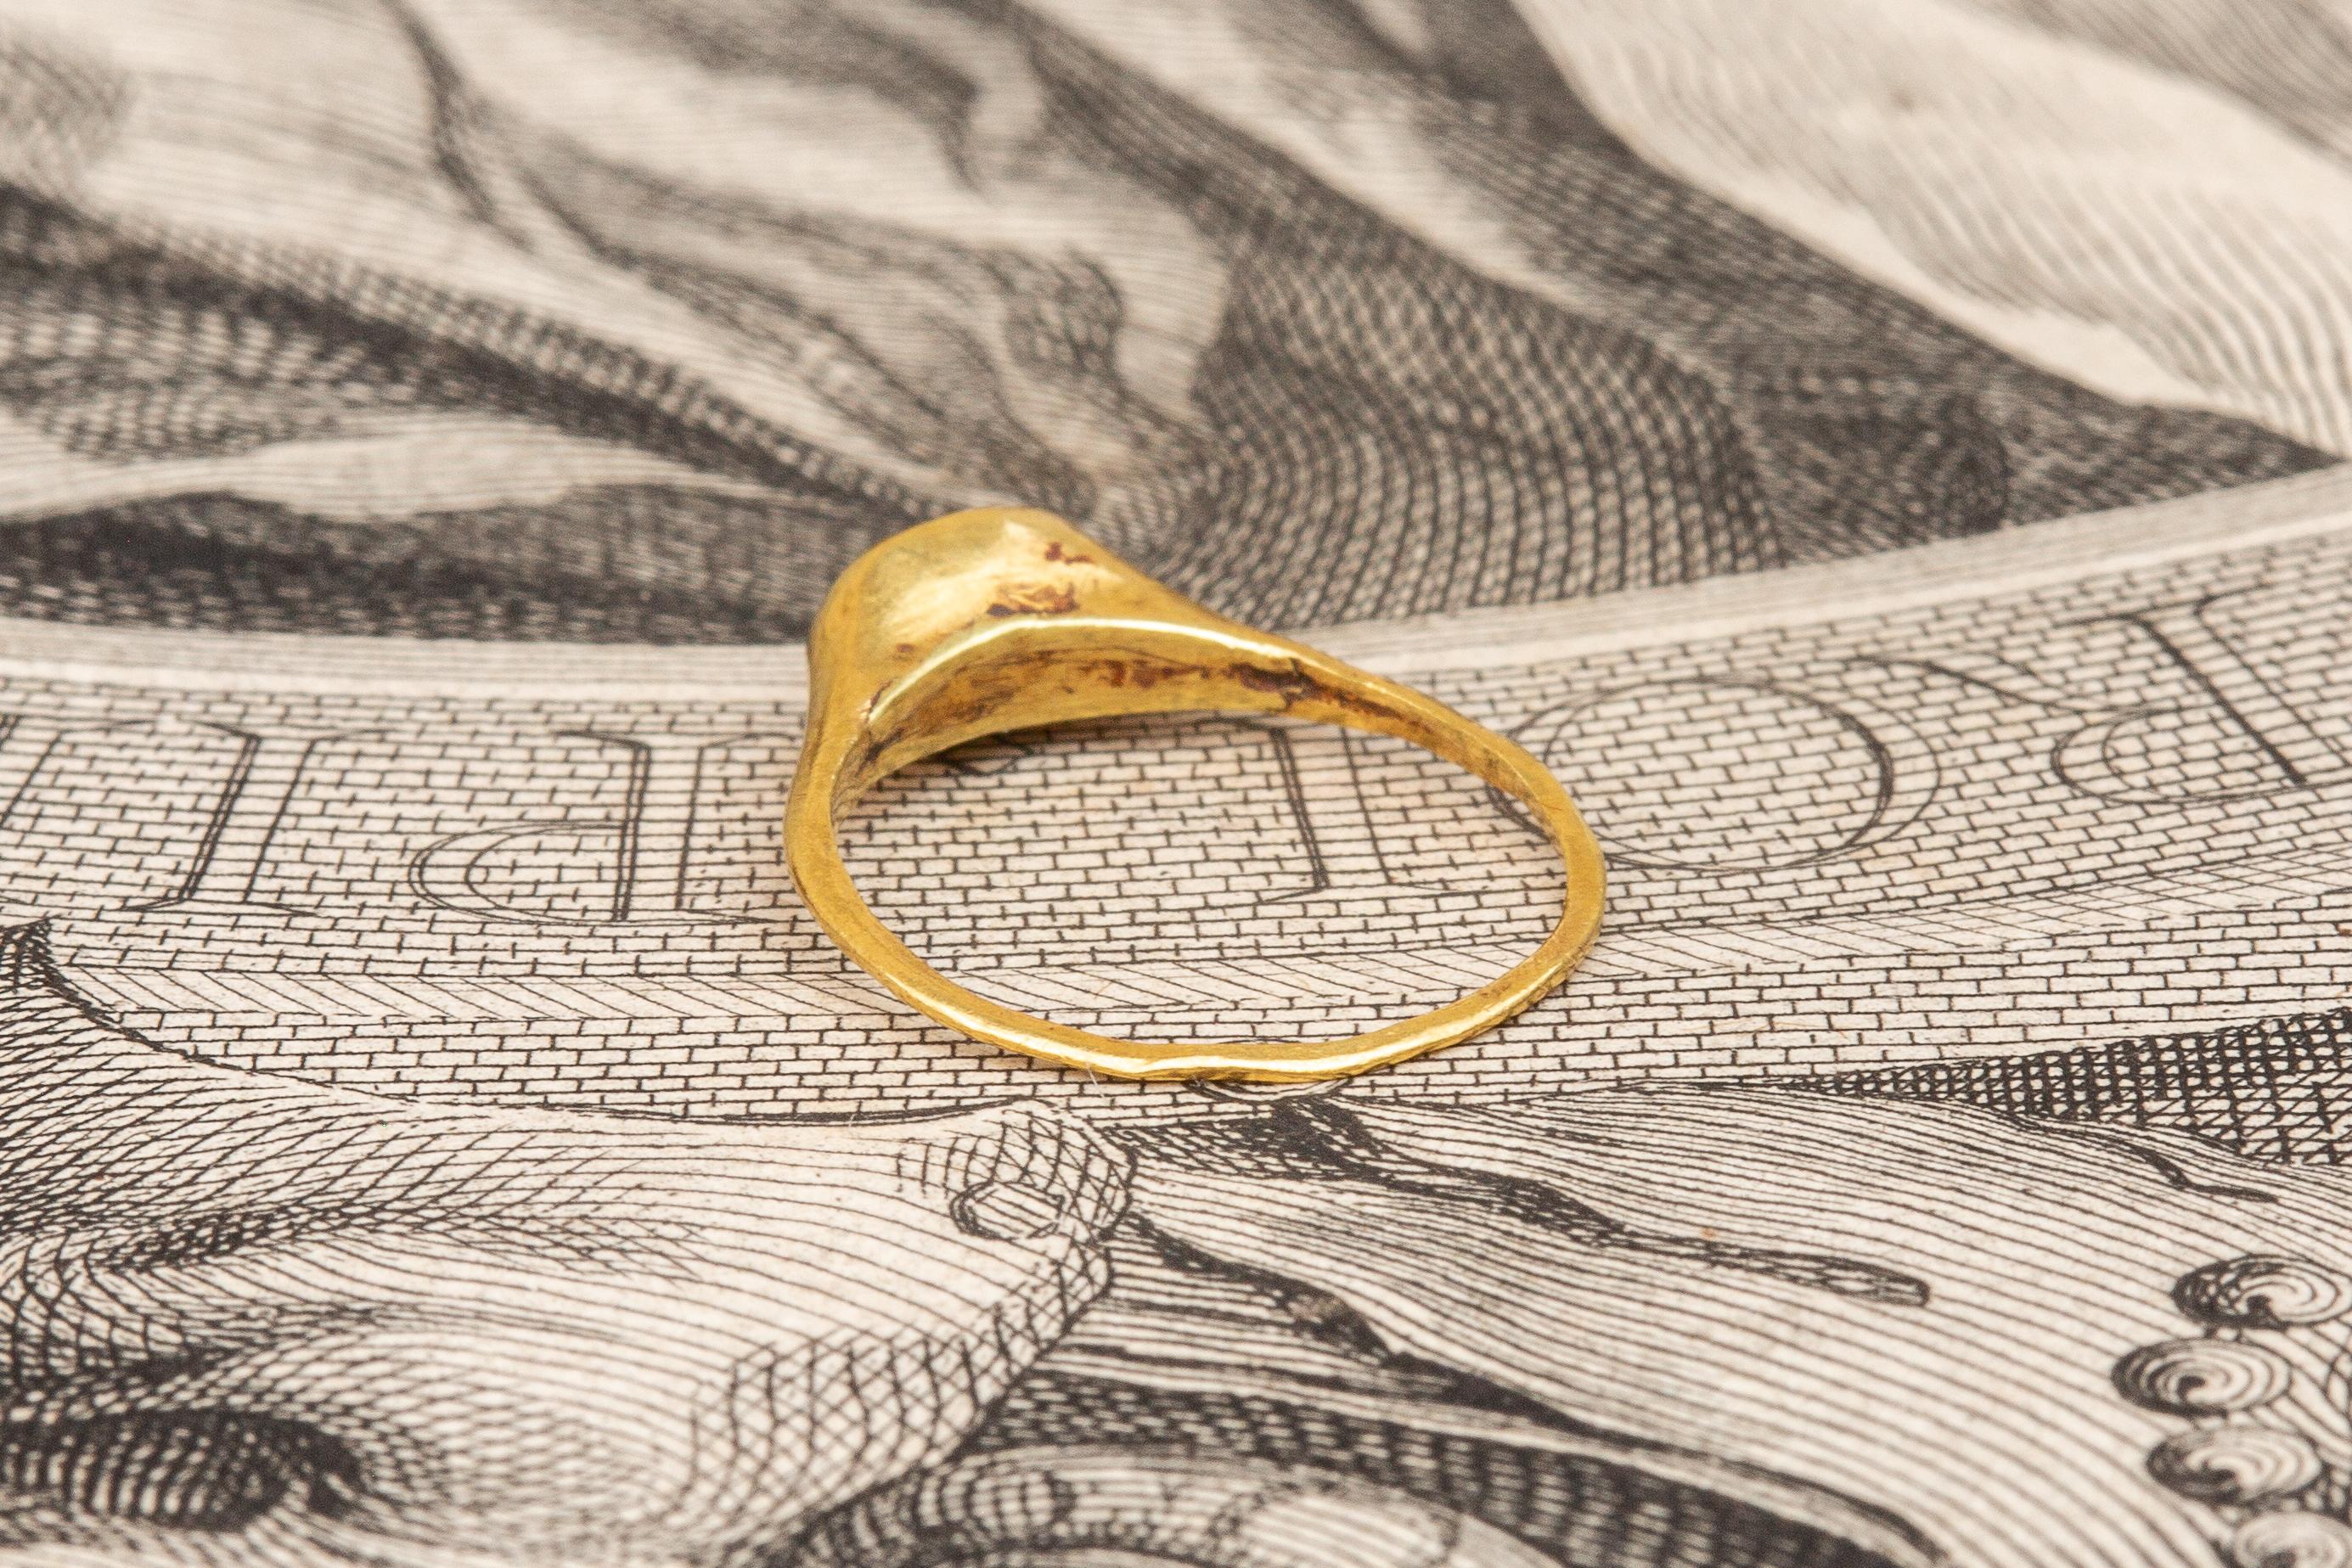 14th century ring